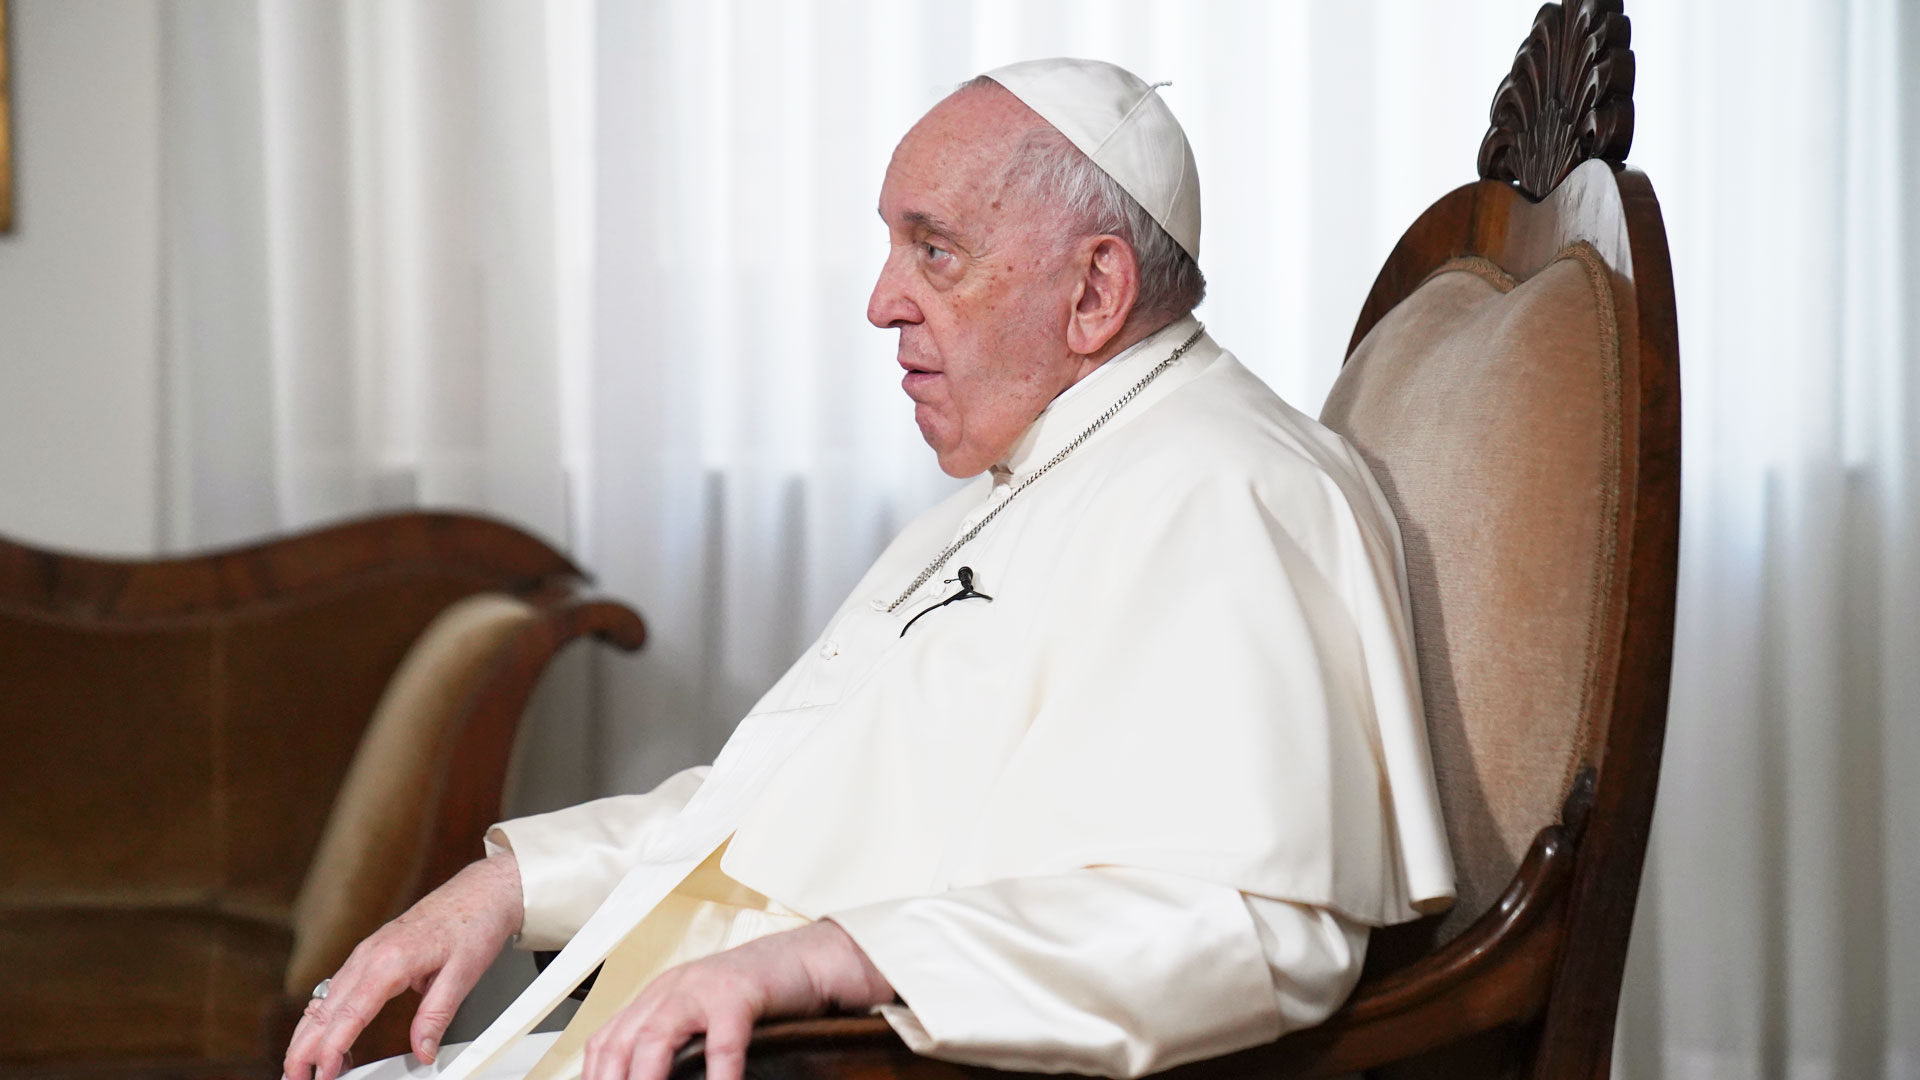 El papa Francisco califica el régimen de Daniel Ortega como una “dictadura grosera”